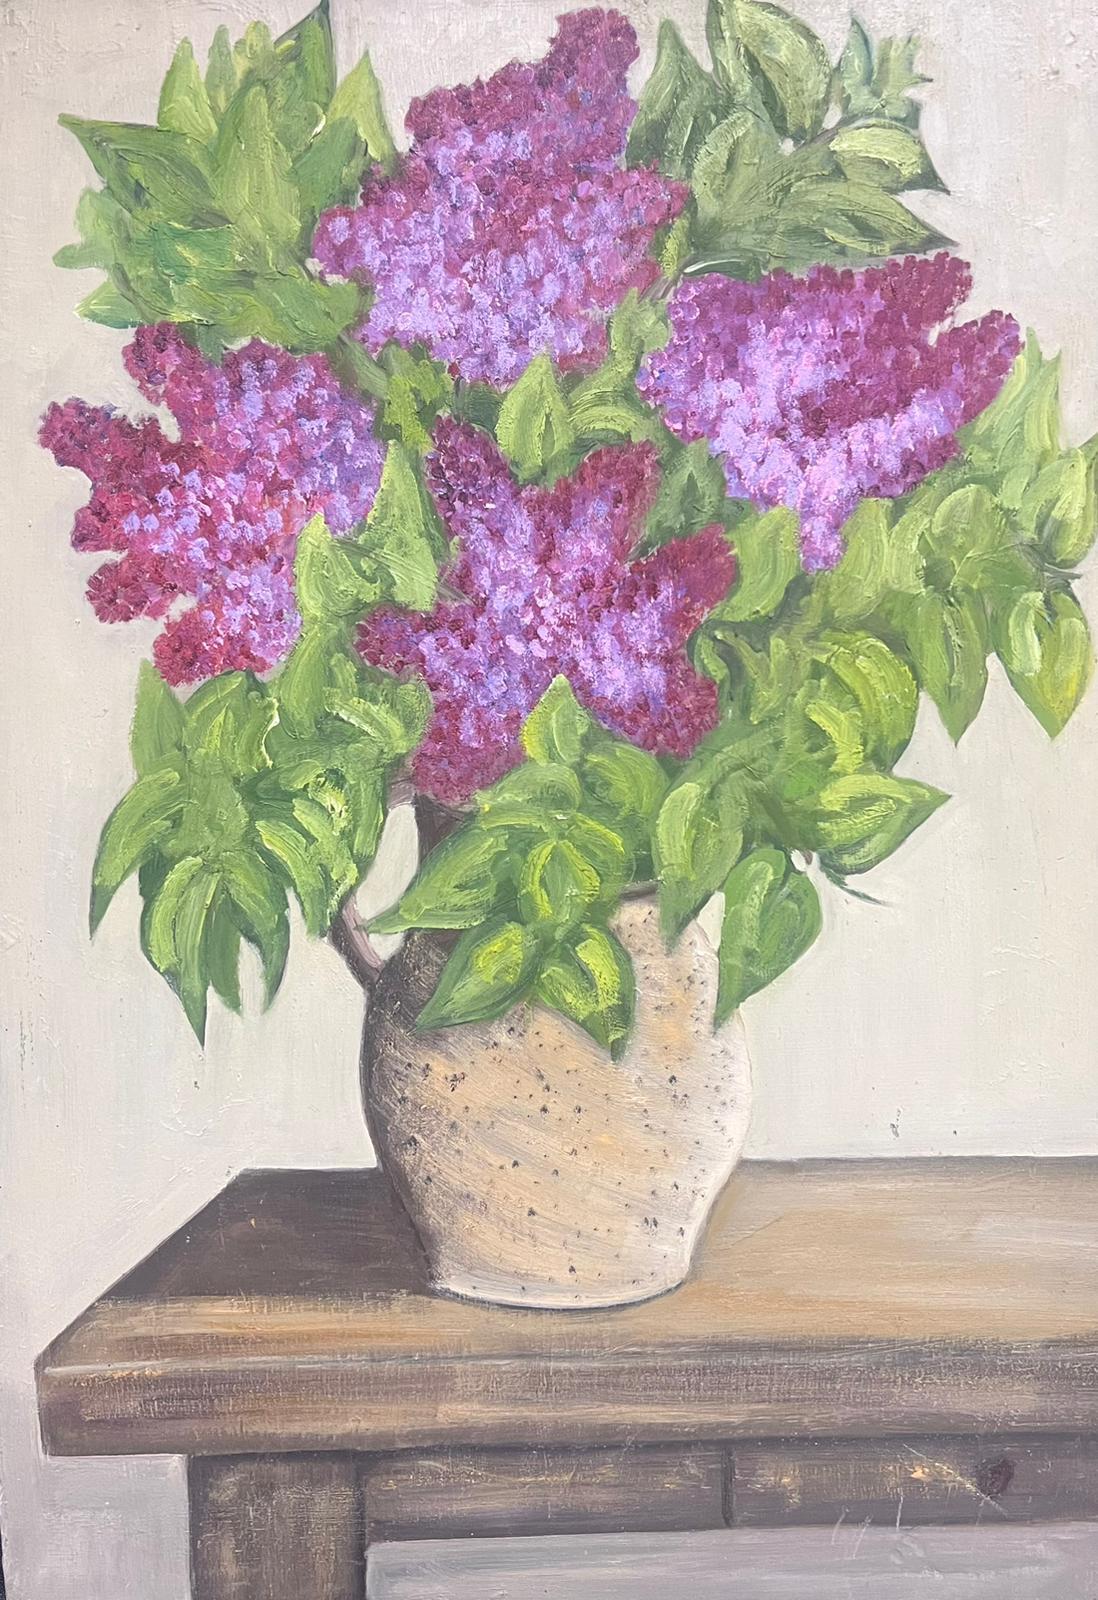 Mid 20th Century French Oil Painting Syringa Vulgaris Flowers in Vase Still Life